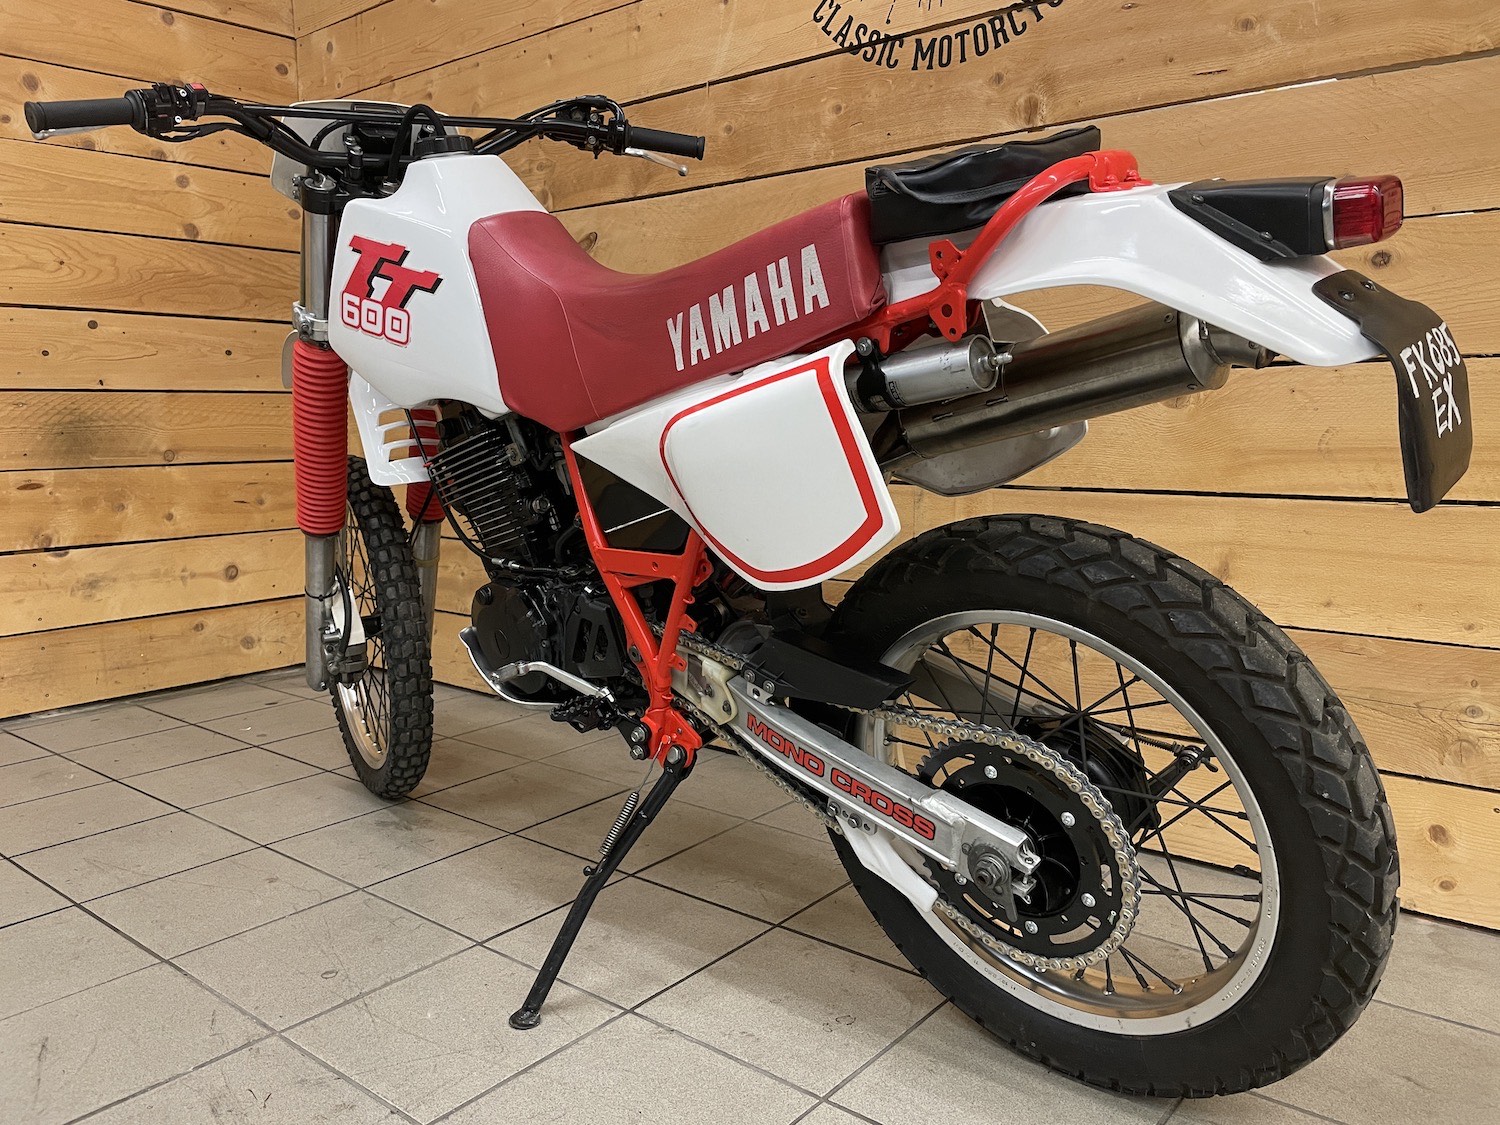 Yamaha_TT600_88_cezanne_classic_motorcycle_8-101.jpg